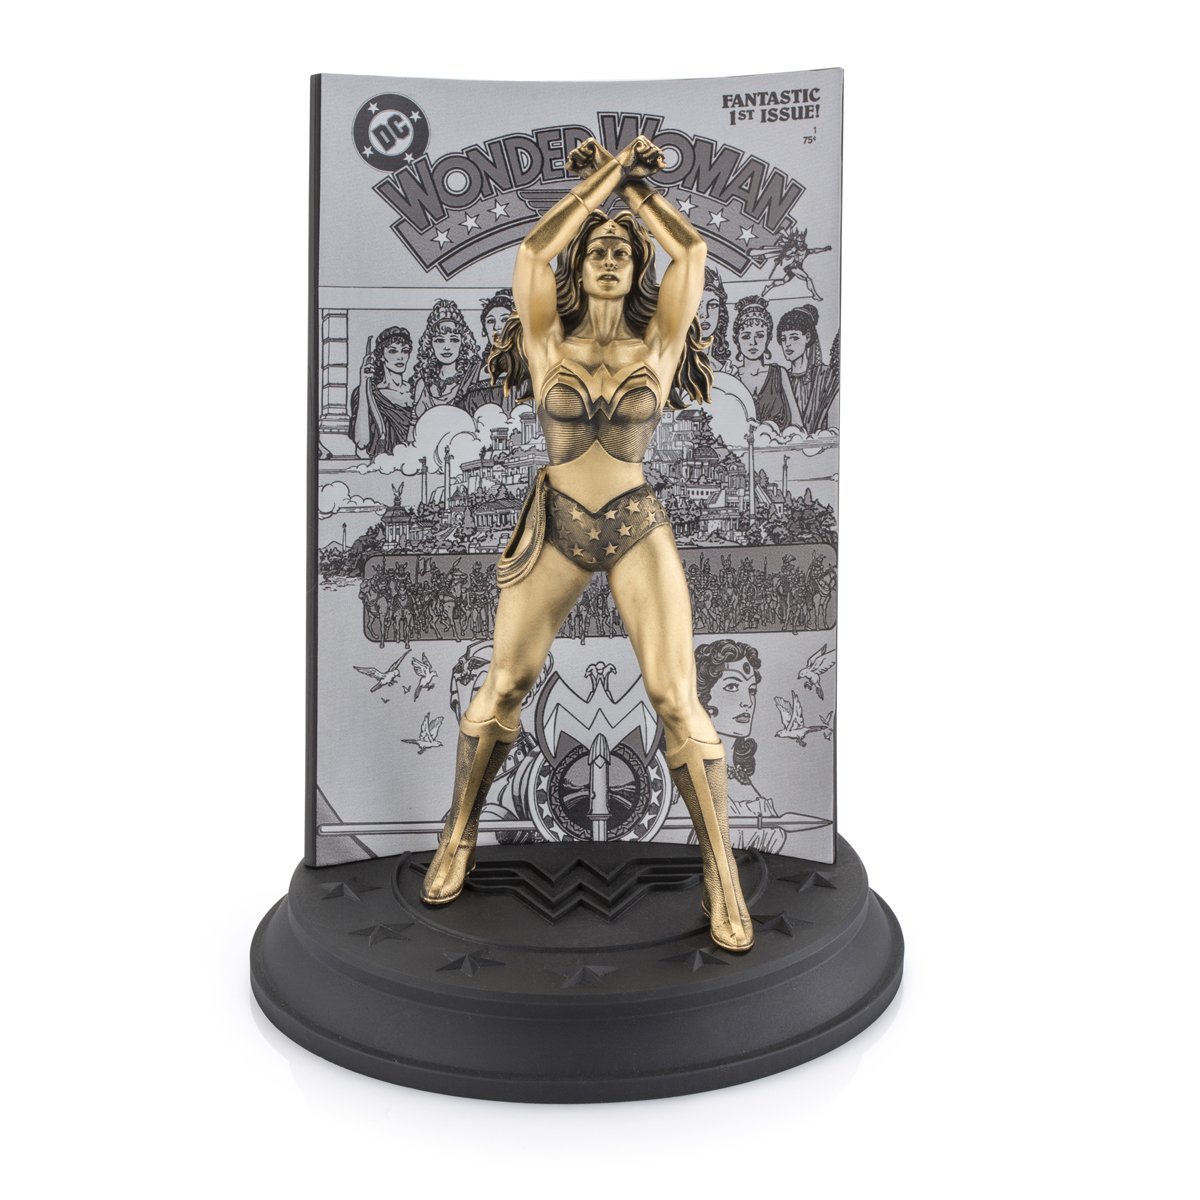 Wonder Woman Volume 2 #1 Gold Limited Edition Figurine - DC Statue